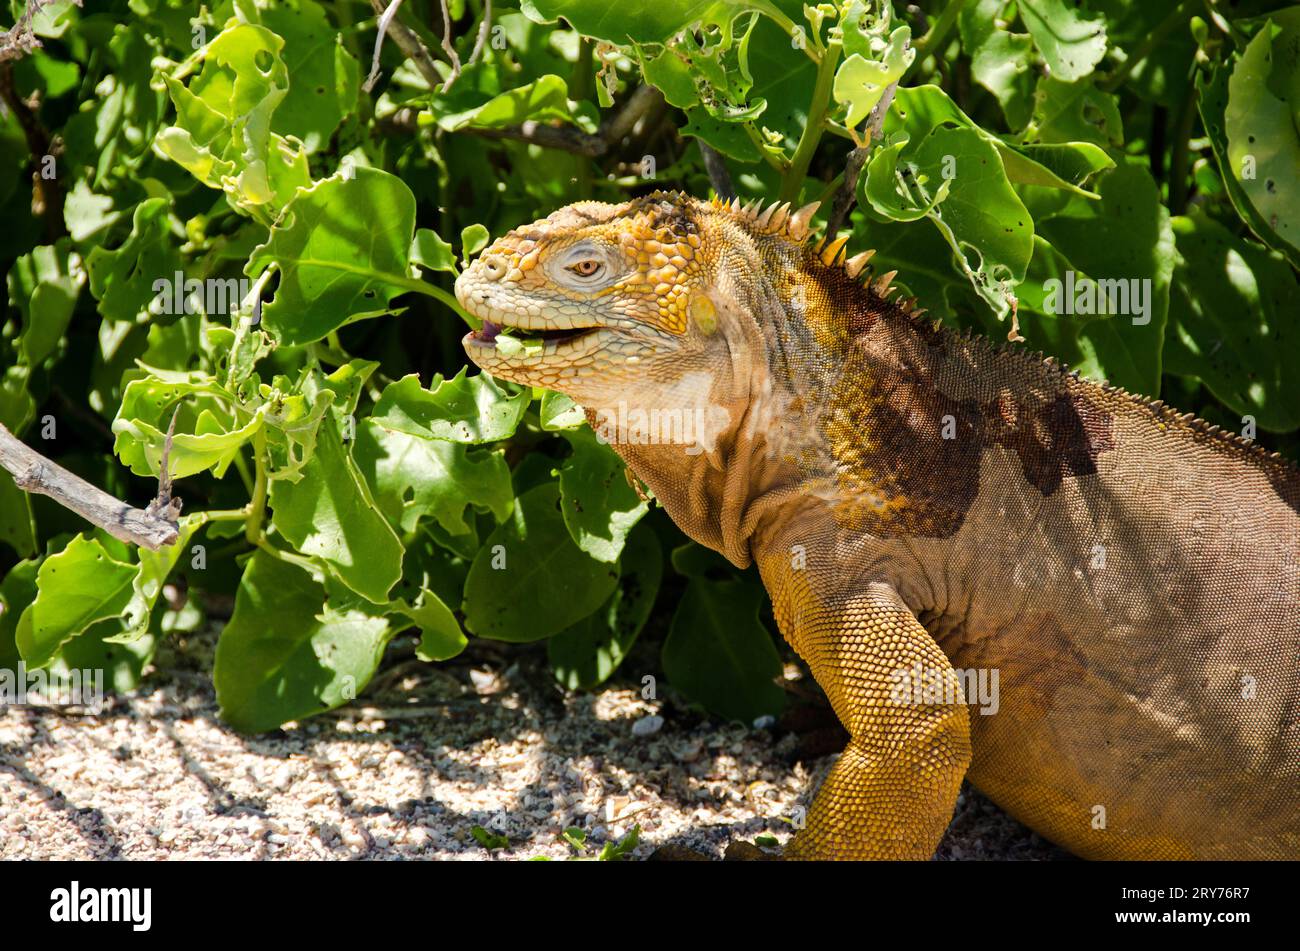 yellow iguana of galapagos islands Stock Photo